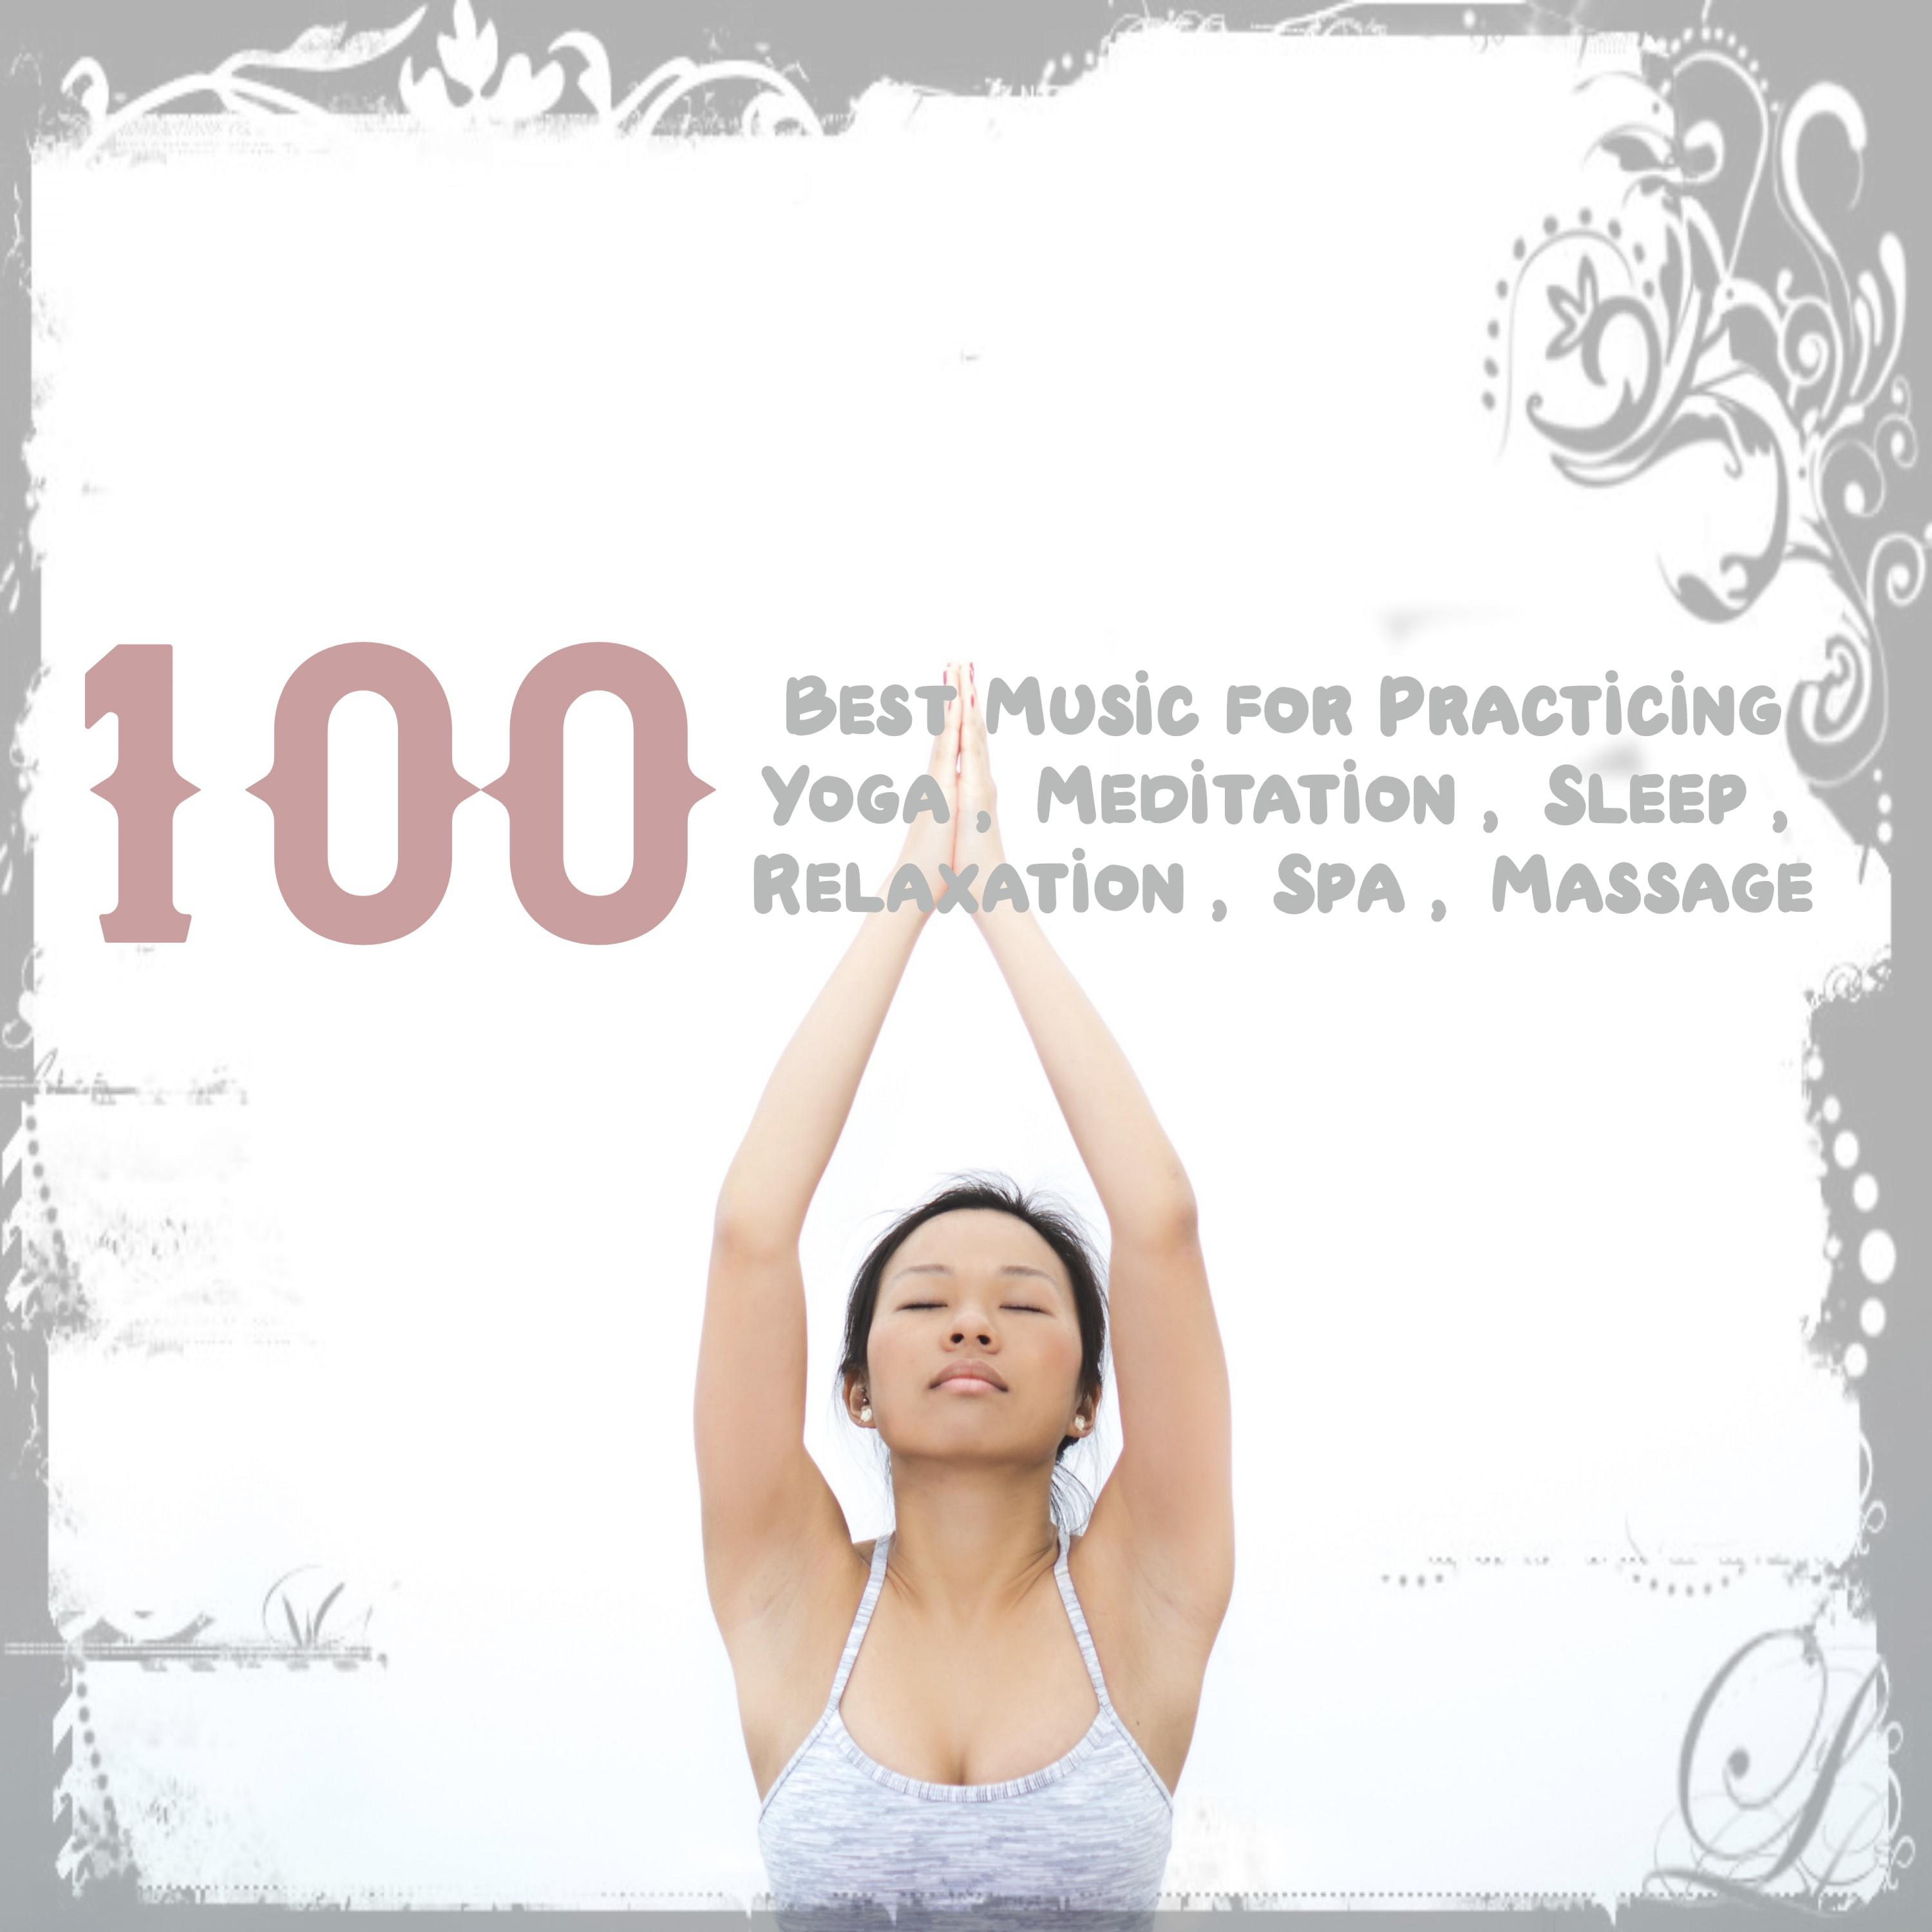 100 Best Music for Practicing Yoga: Meditation, Sleep, Relaxation, Spa, Massage